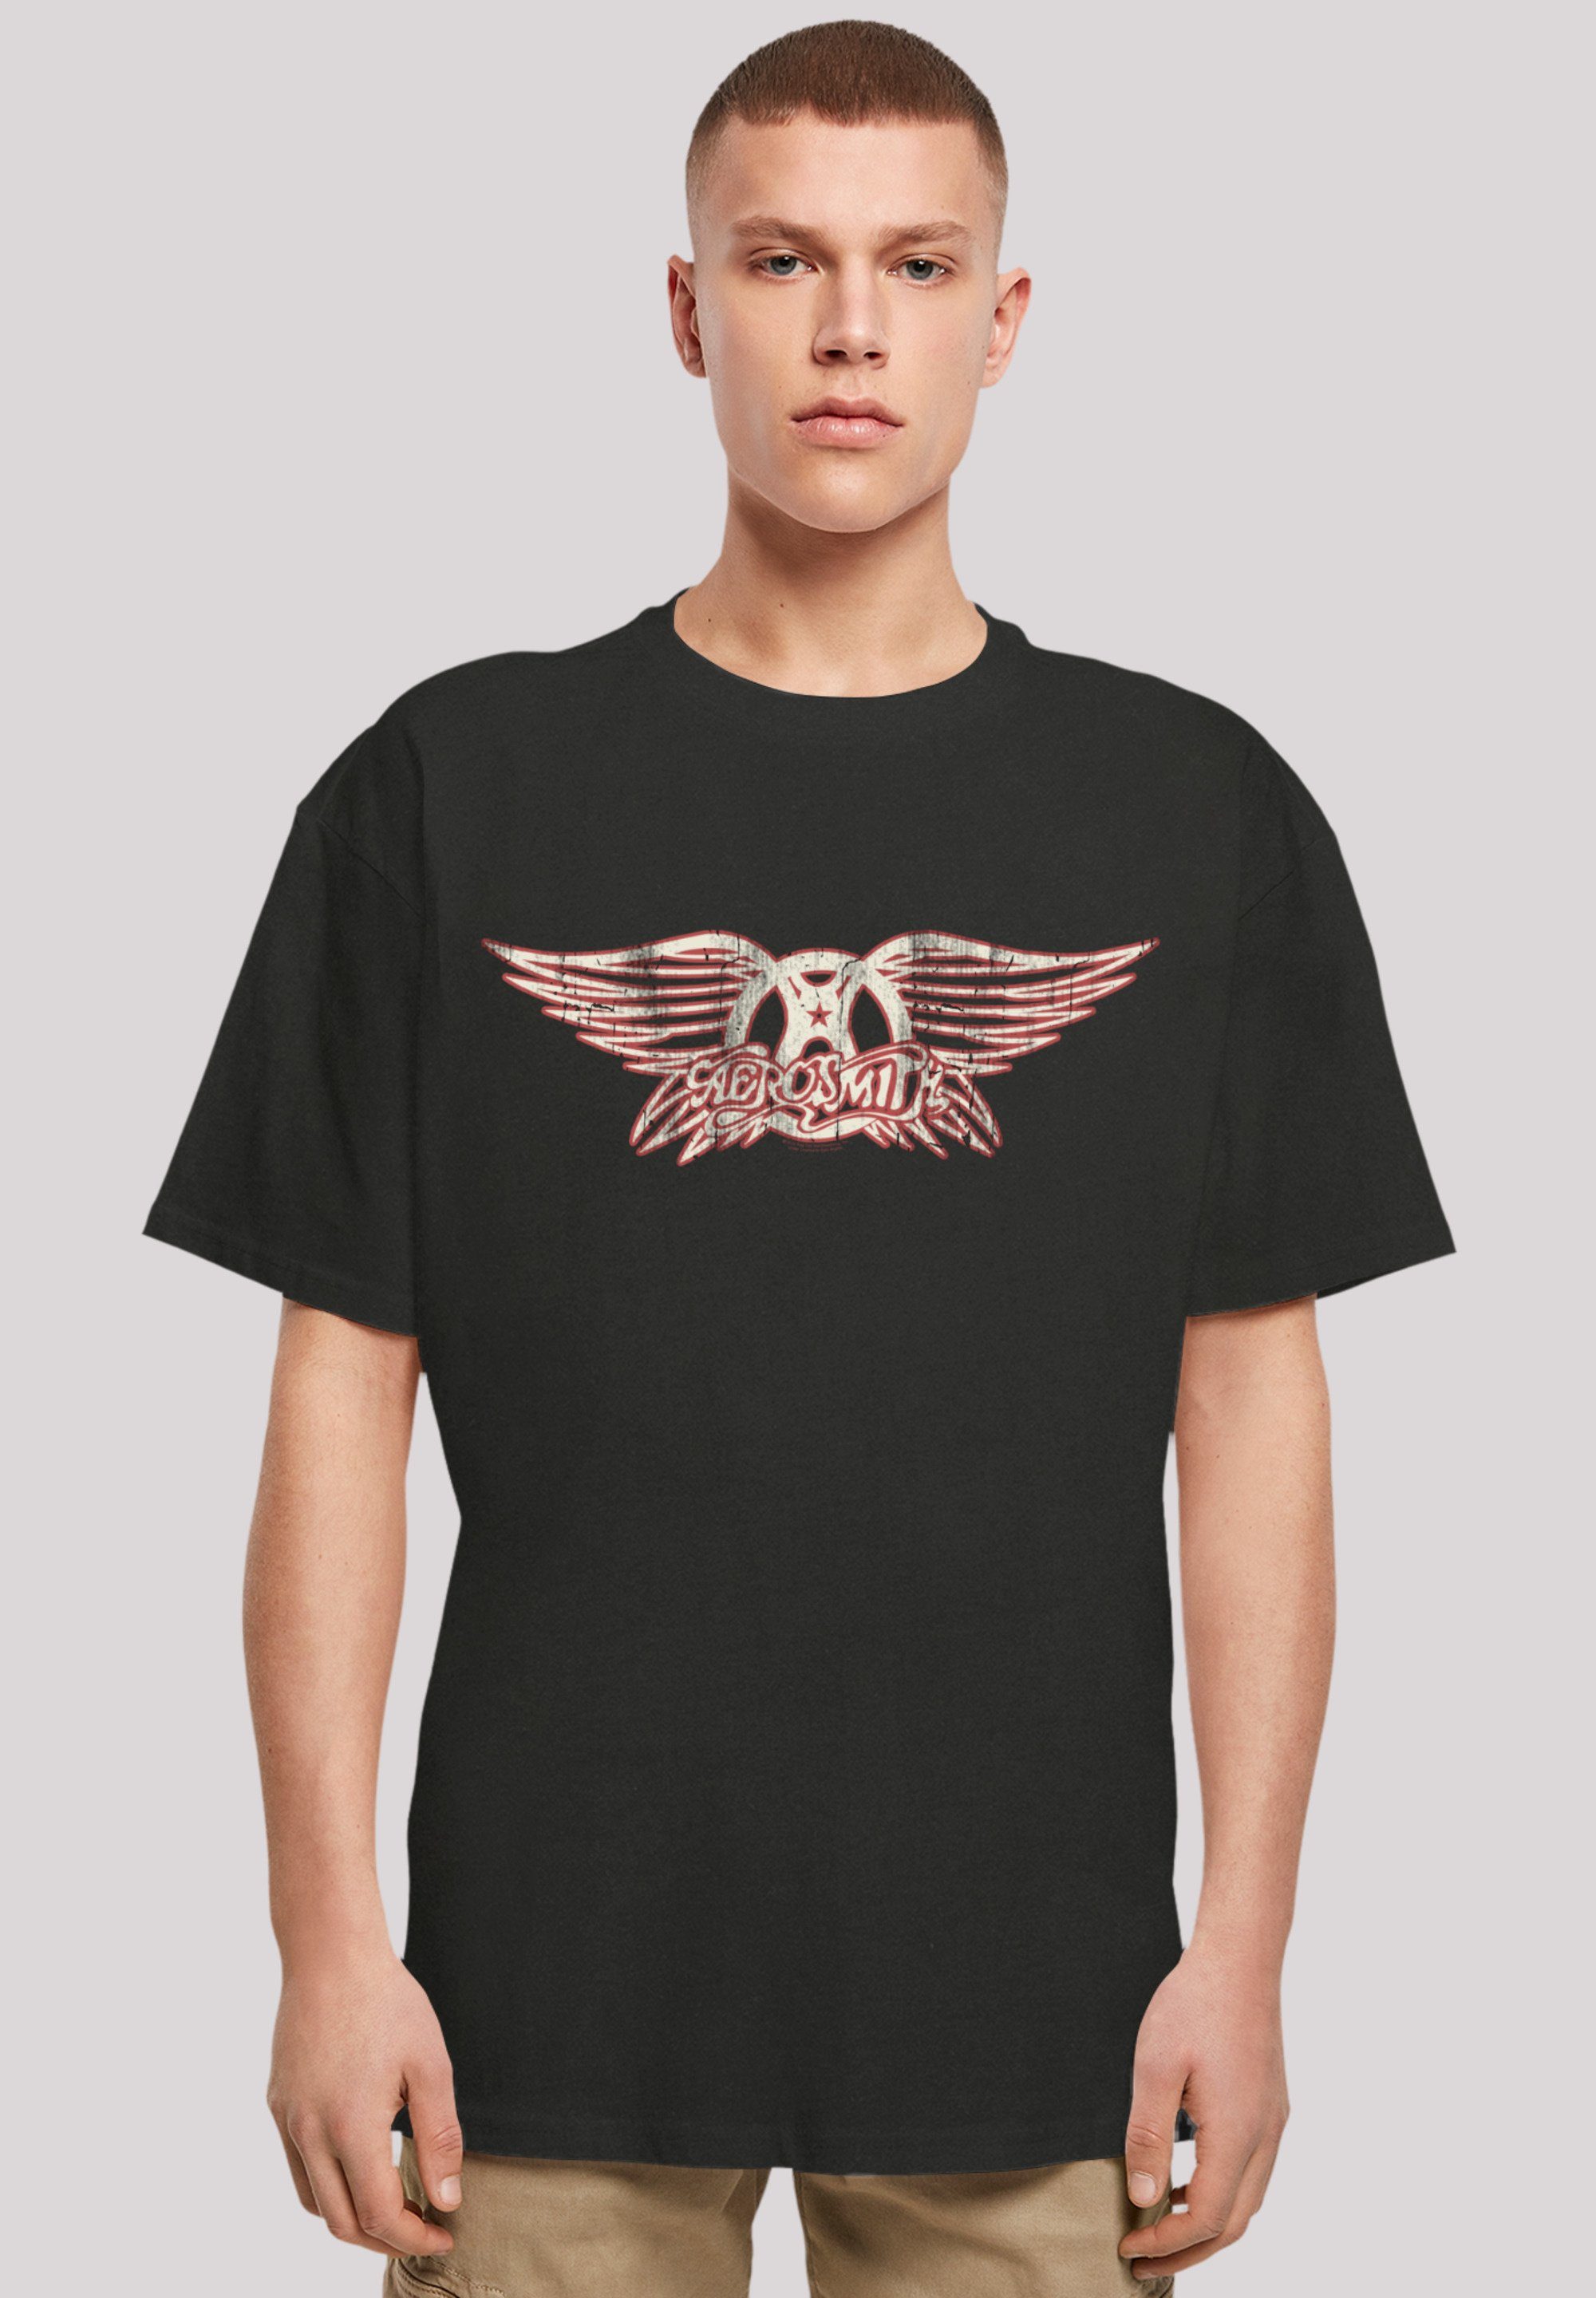 Qualität, Band Logo F4NT4STIC schwarz Premium Aerosmith Band Rock-Musik, T-Shirt Rock